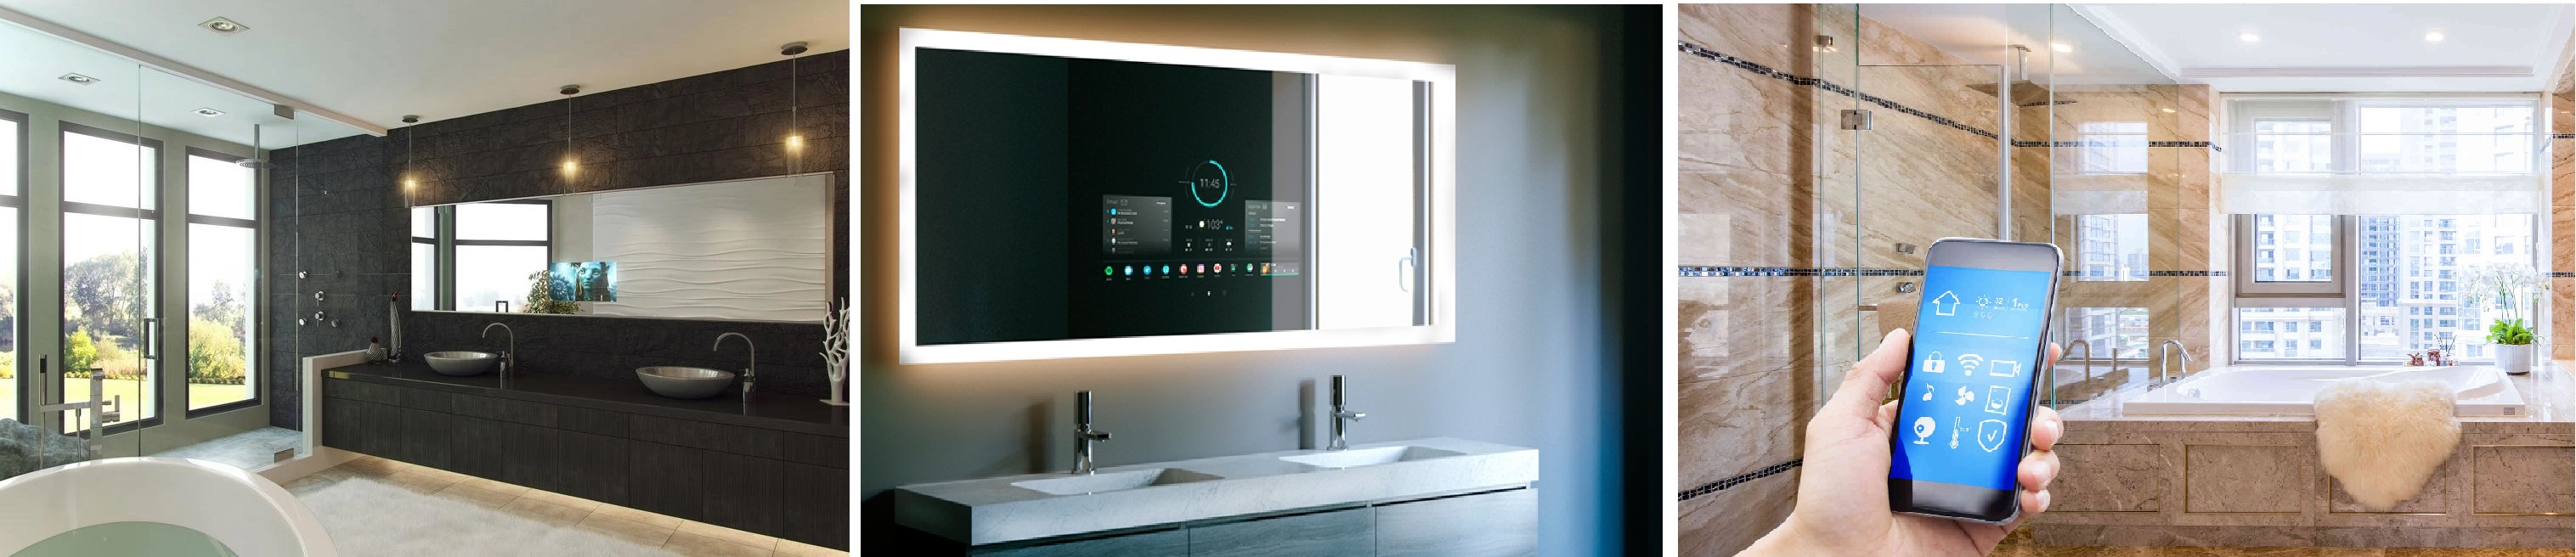 Hotel Stylish Smart Led Bathroom Mirror